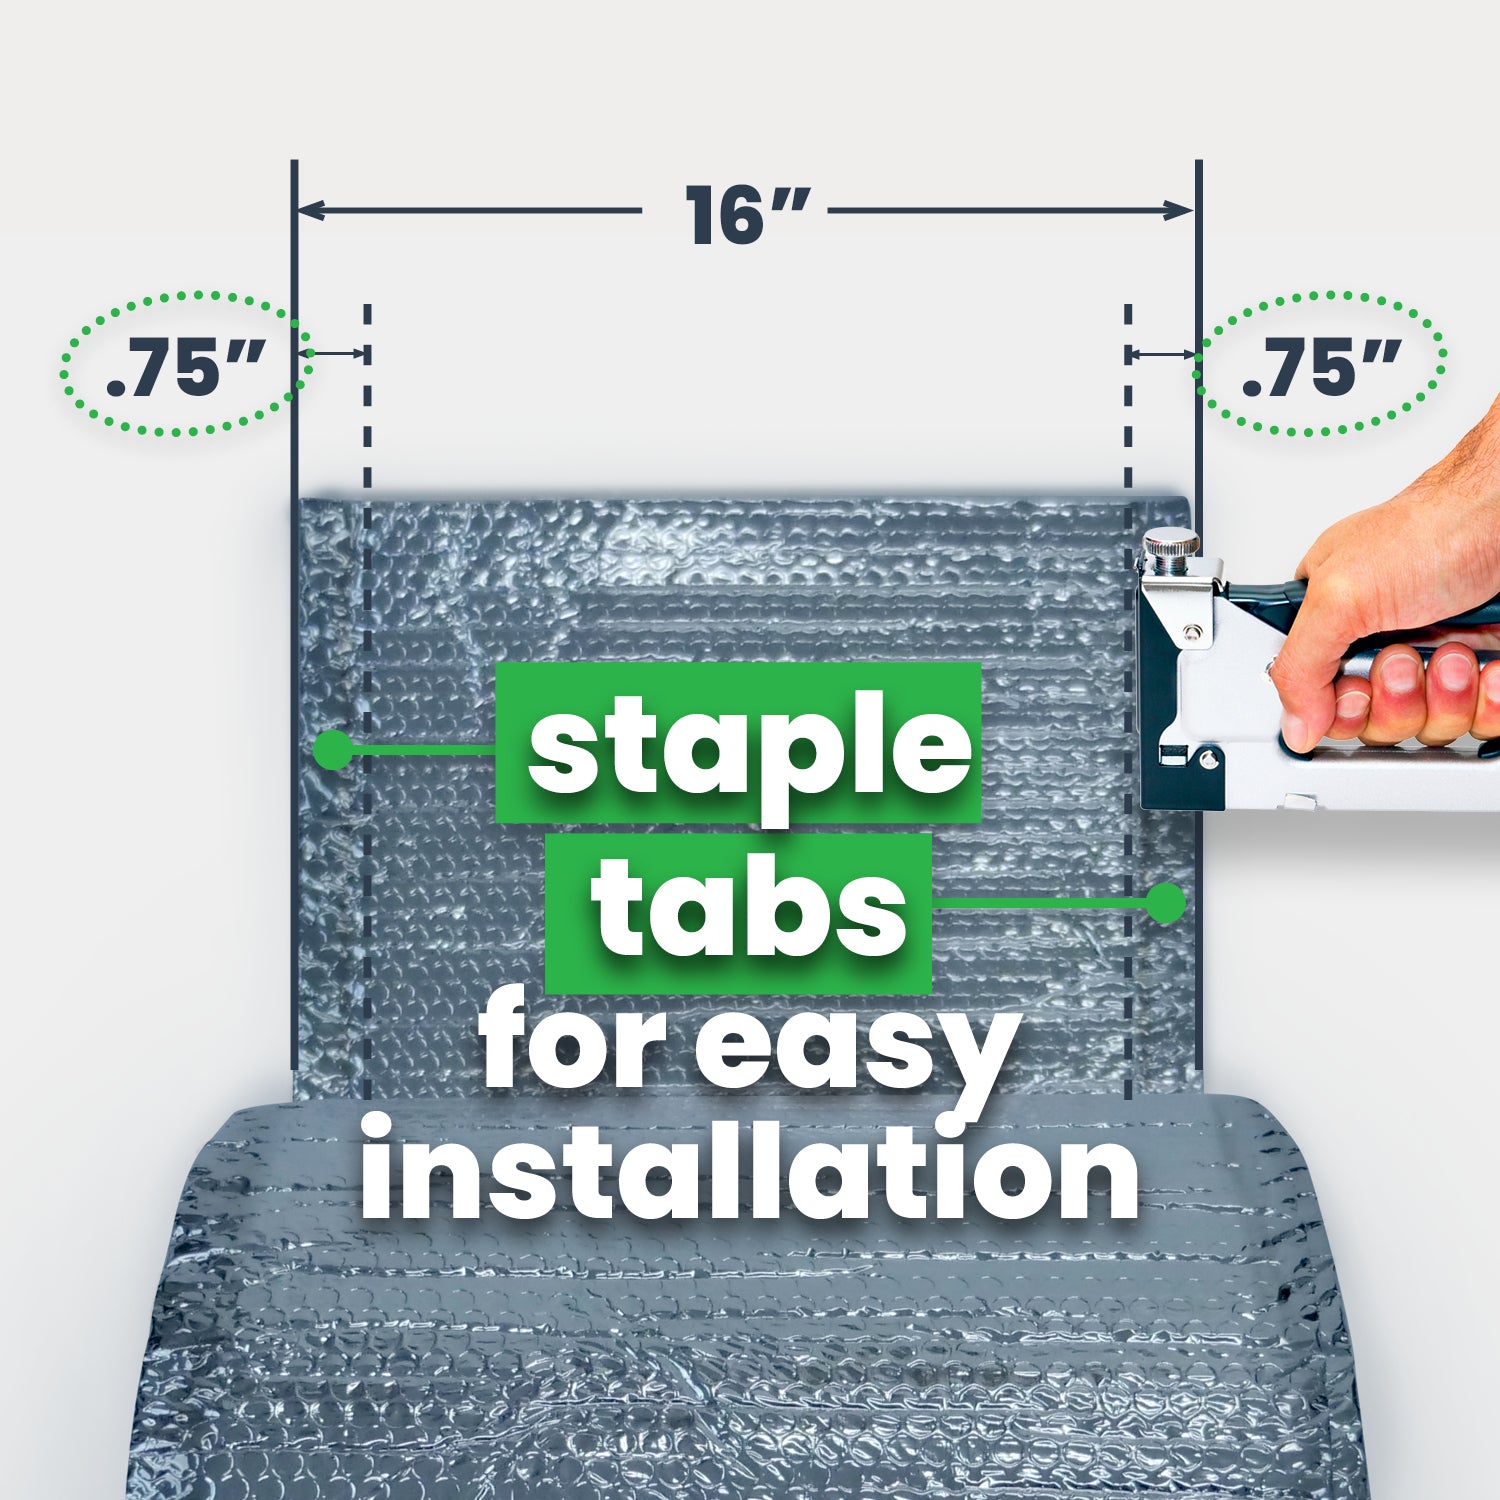 Staple tabs for easy installation